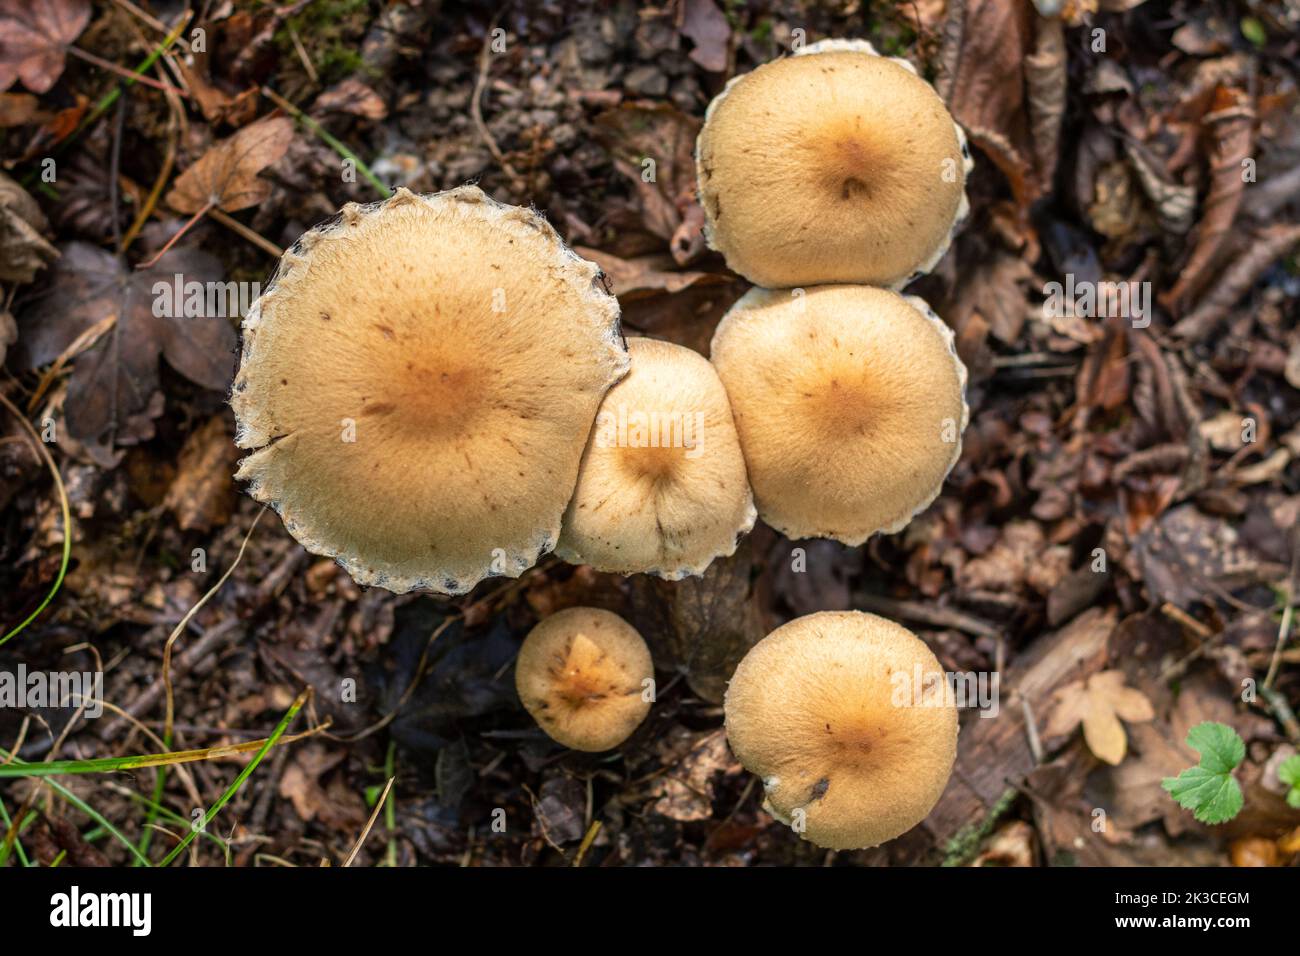 Group of fungi mushrooms toadstools growing among leaf litter on woodland floor during autumn, England, UK Stock Photo